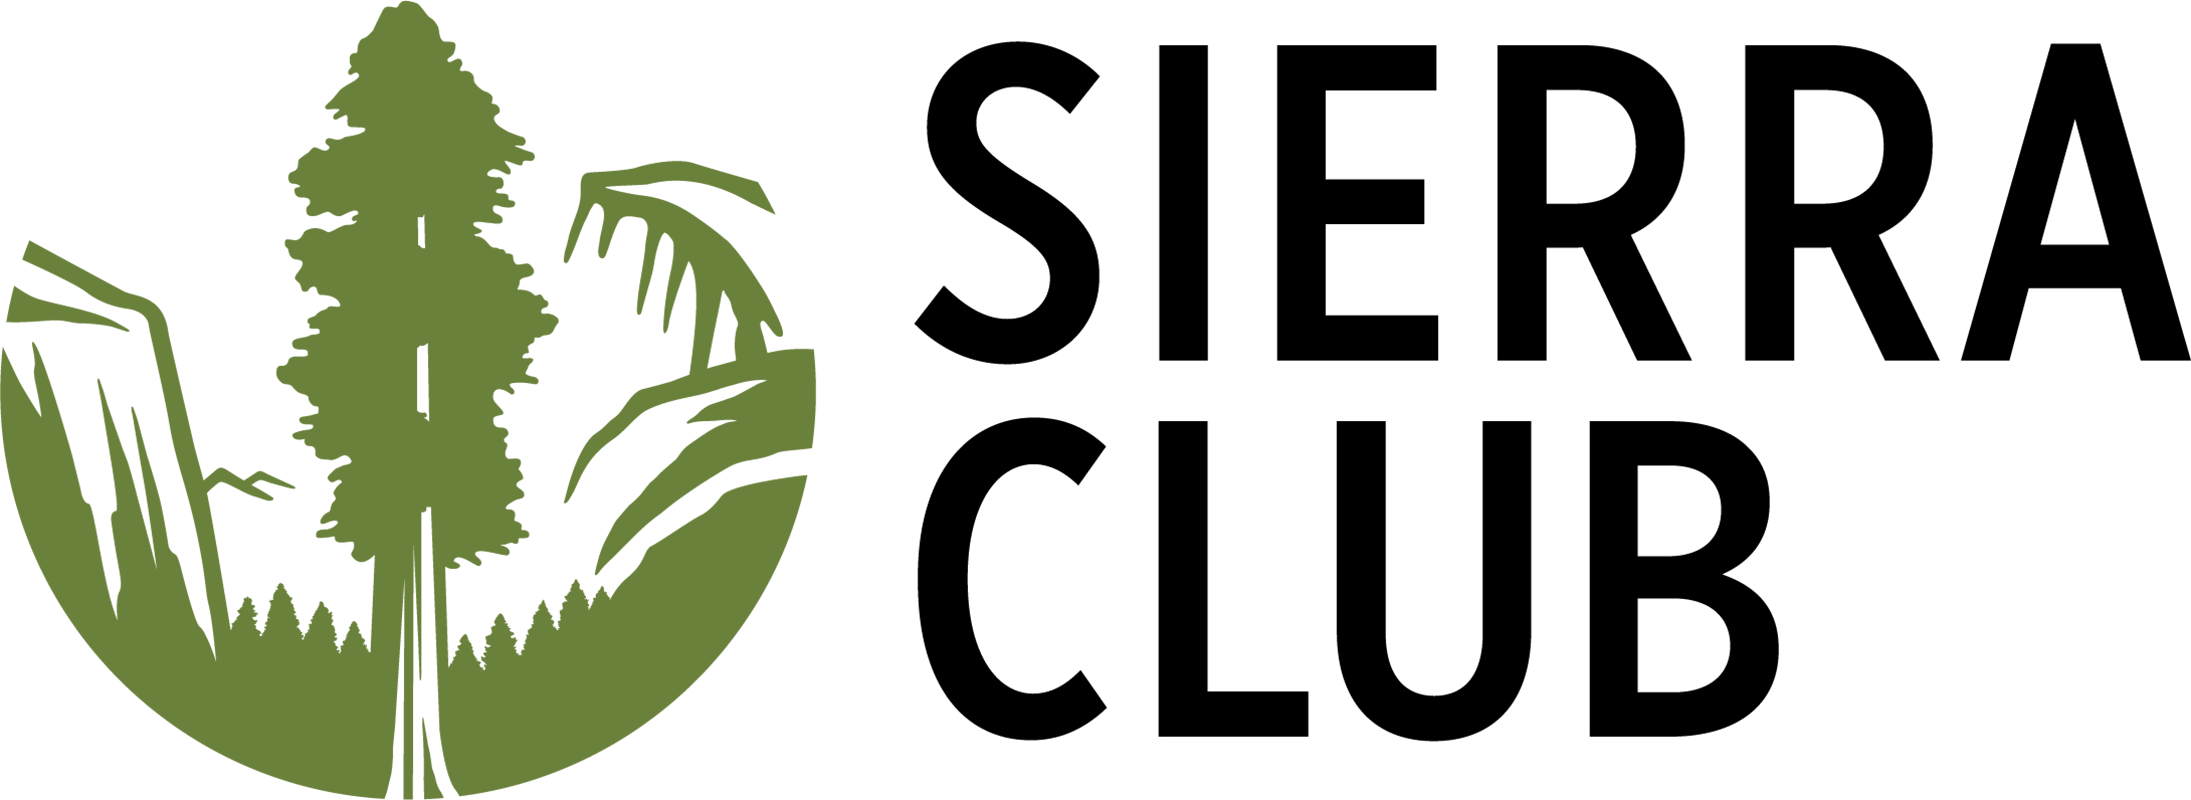 logo of Sierra Club, select to visit their website